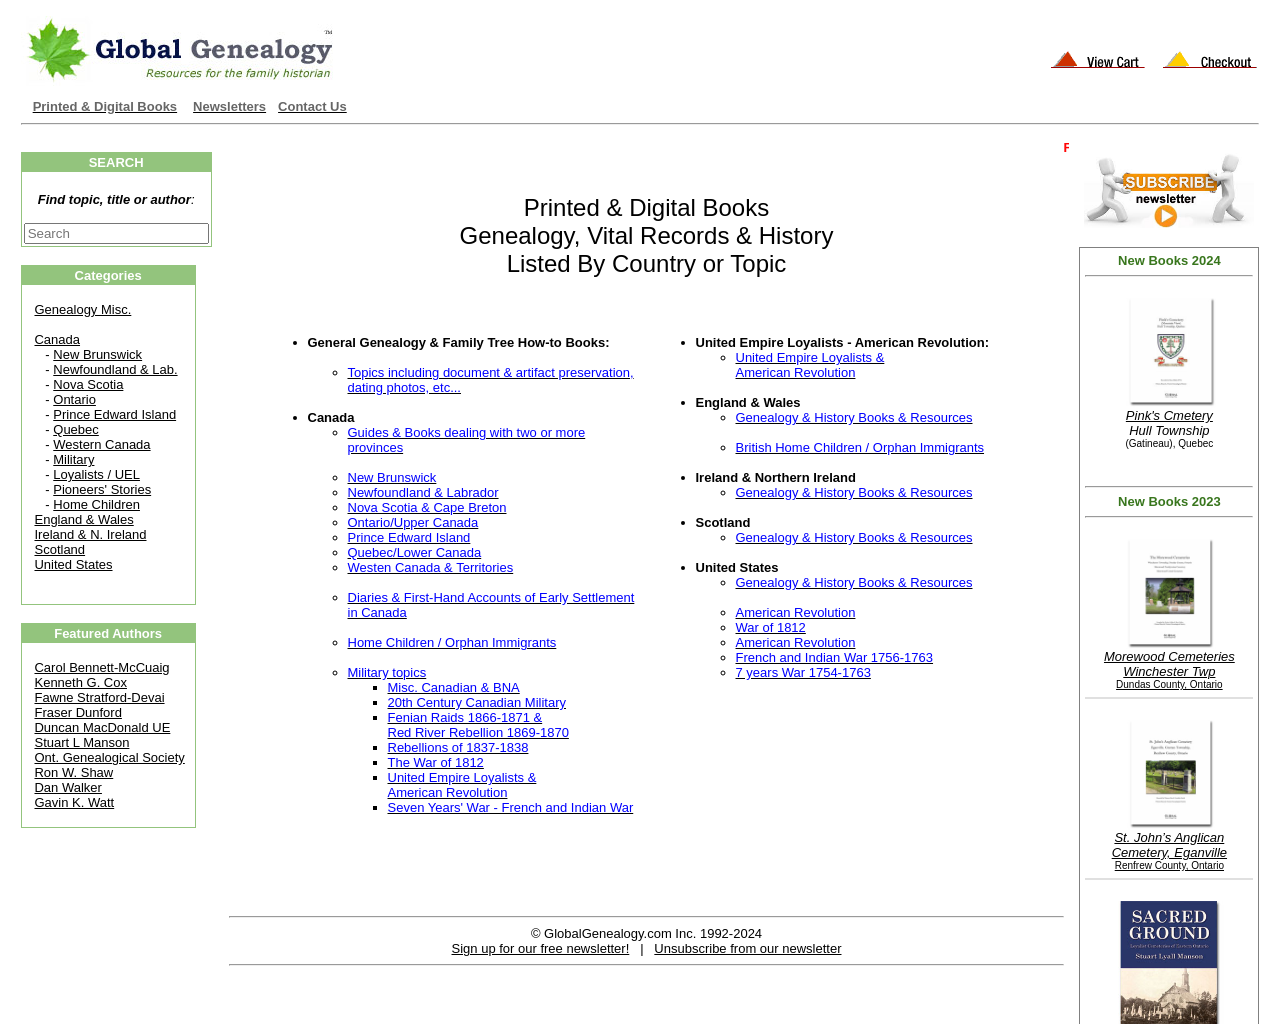 globalgenealogy.com